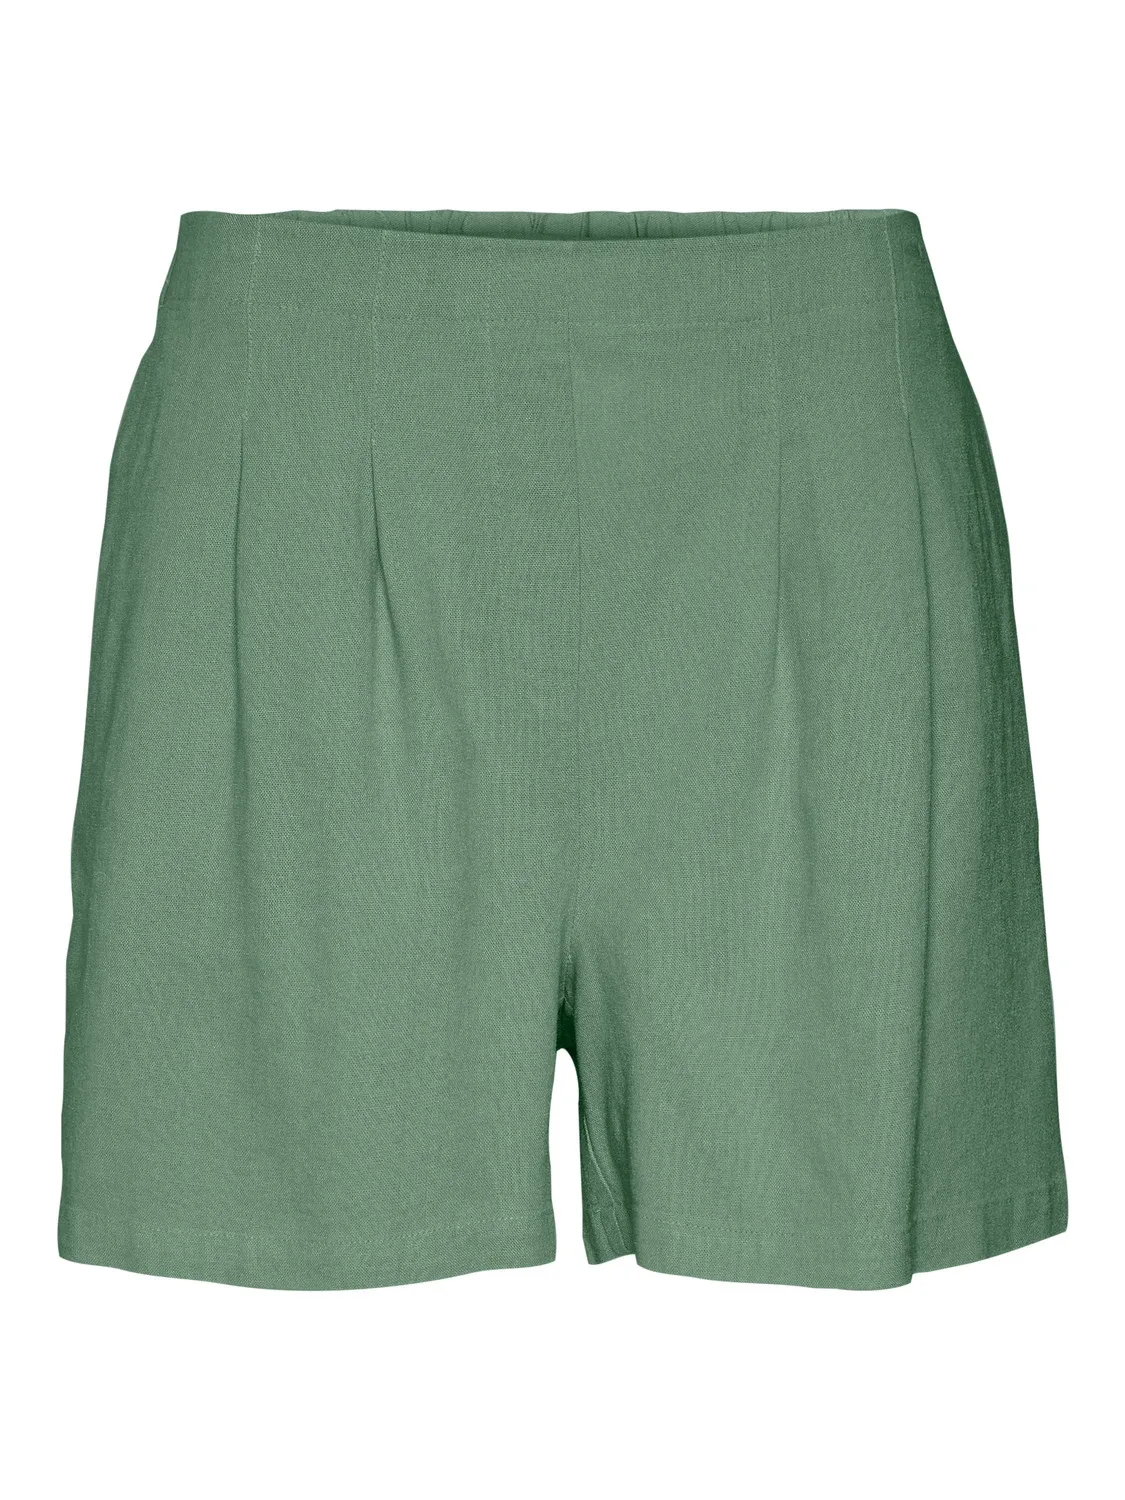 Jesmilo Shorts – Hedge Green